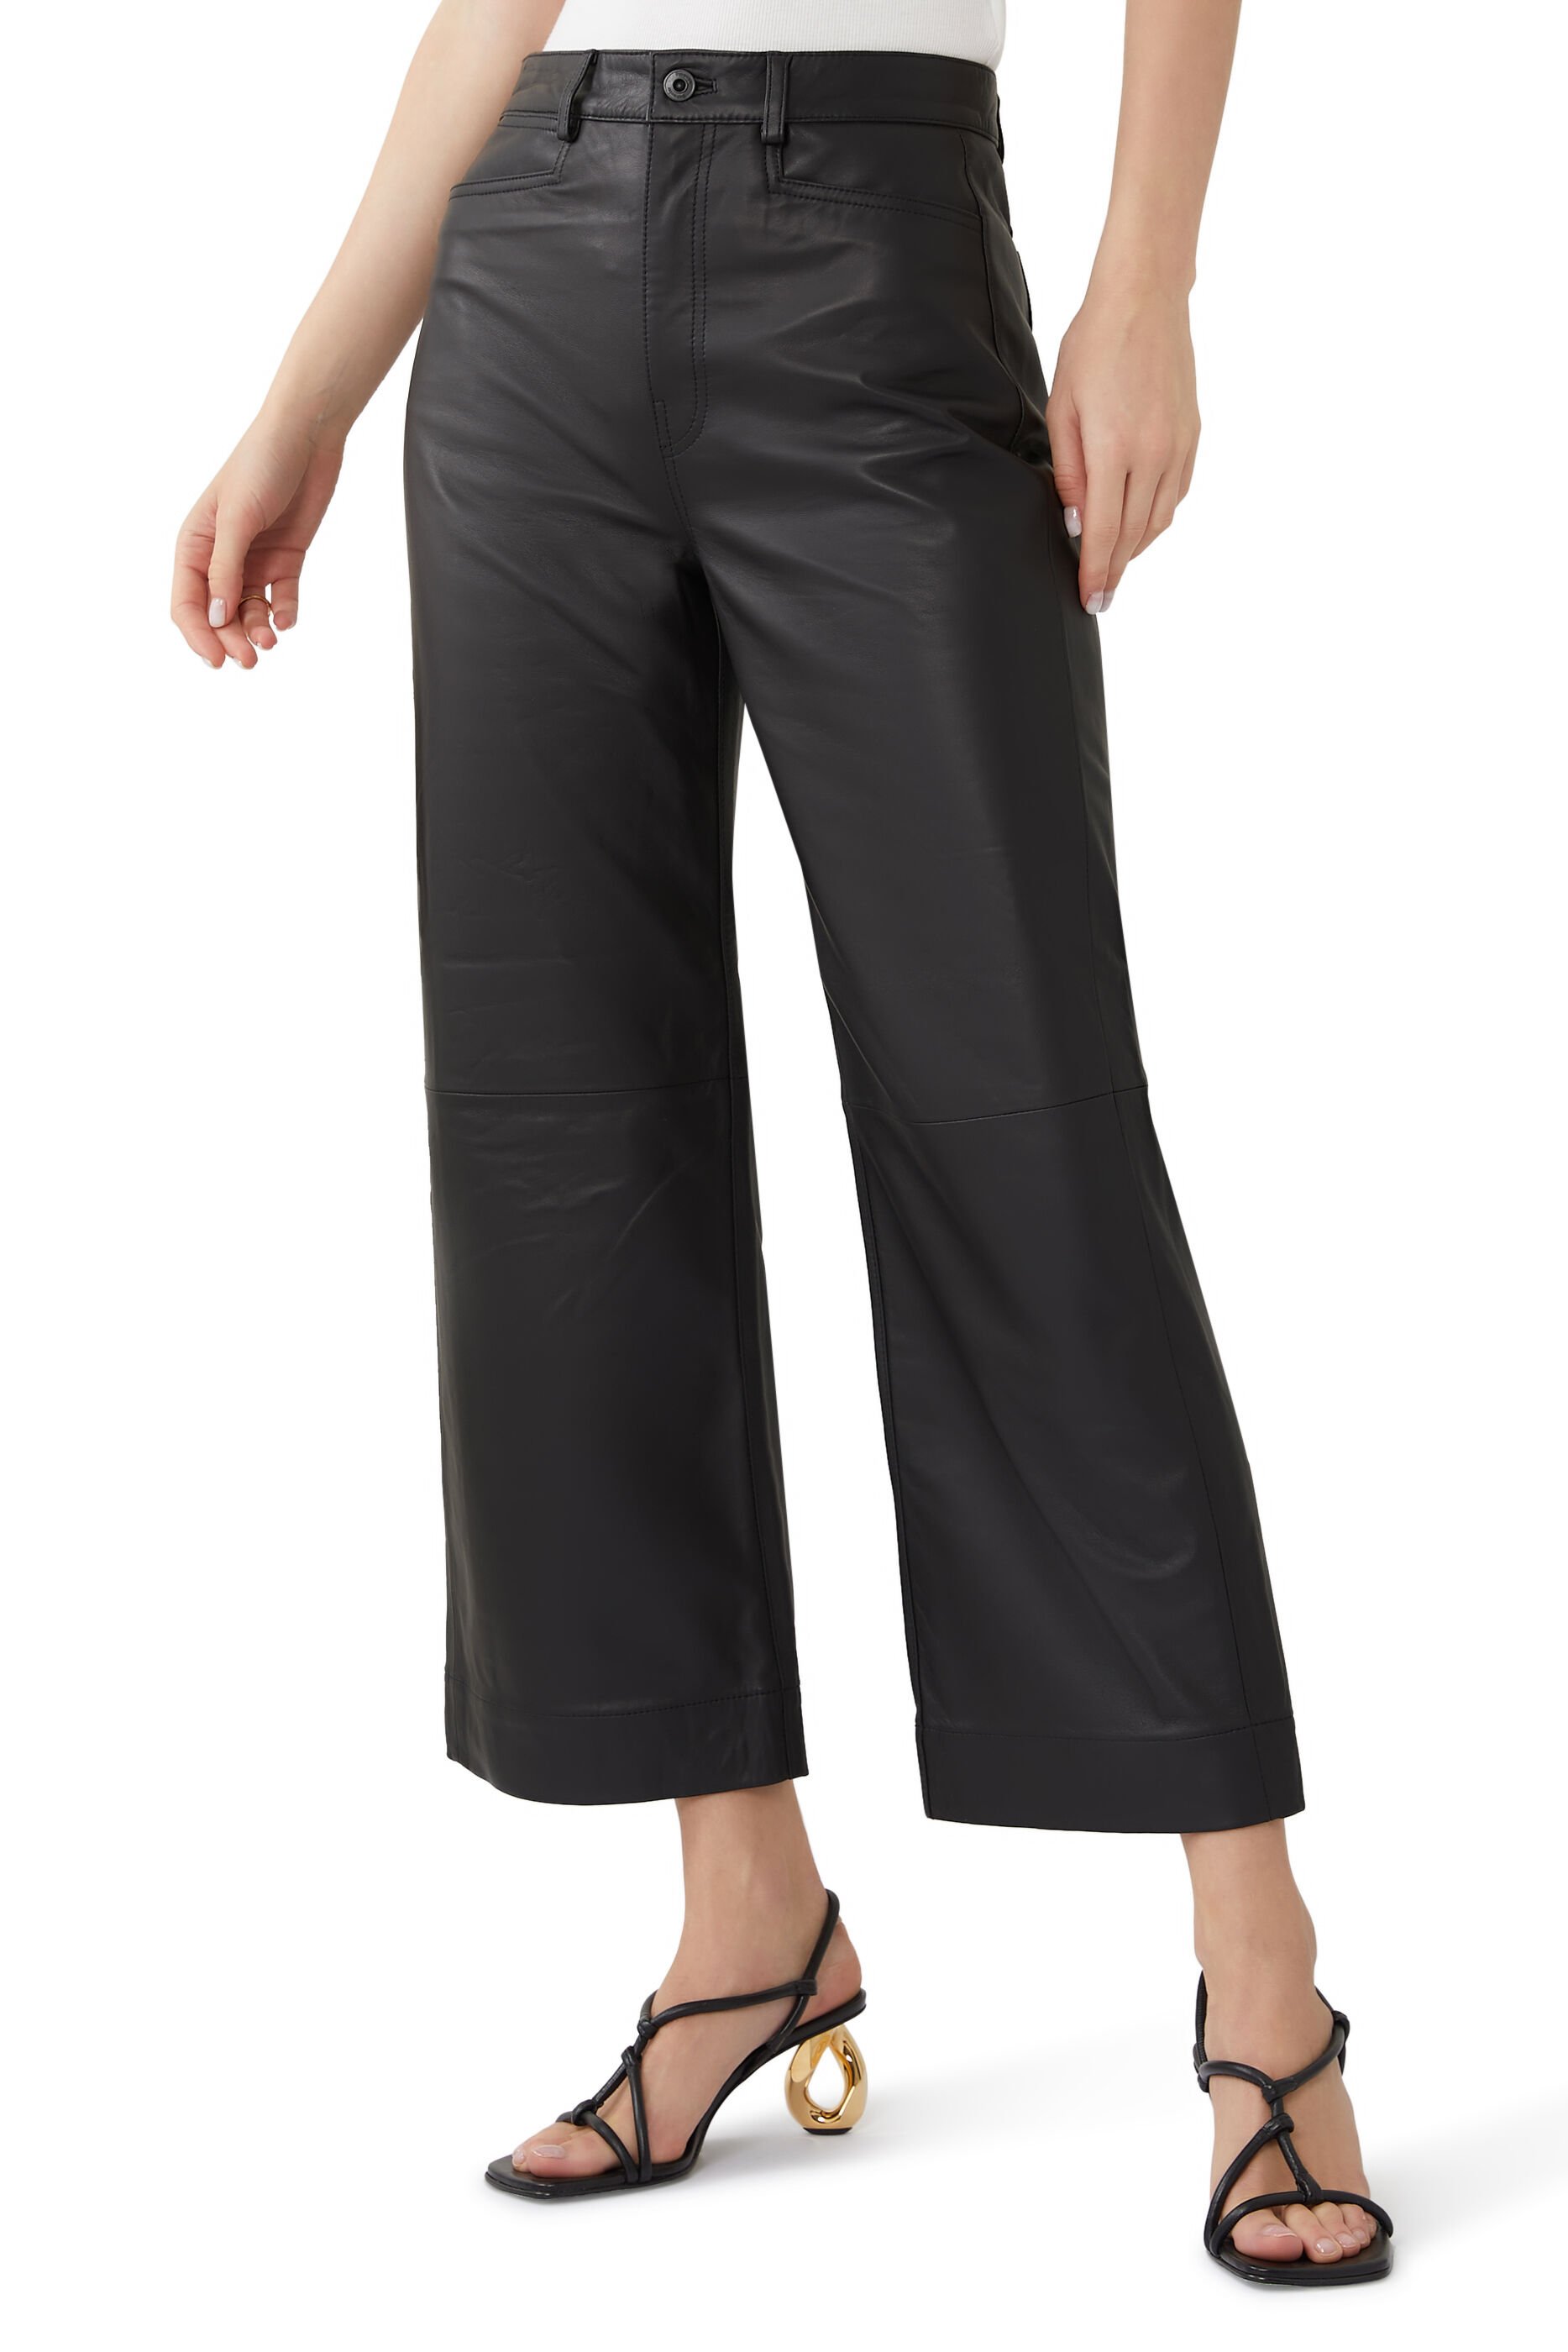 Proenza Schouler White Label nappa-leather culotte trousers - Black